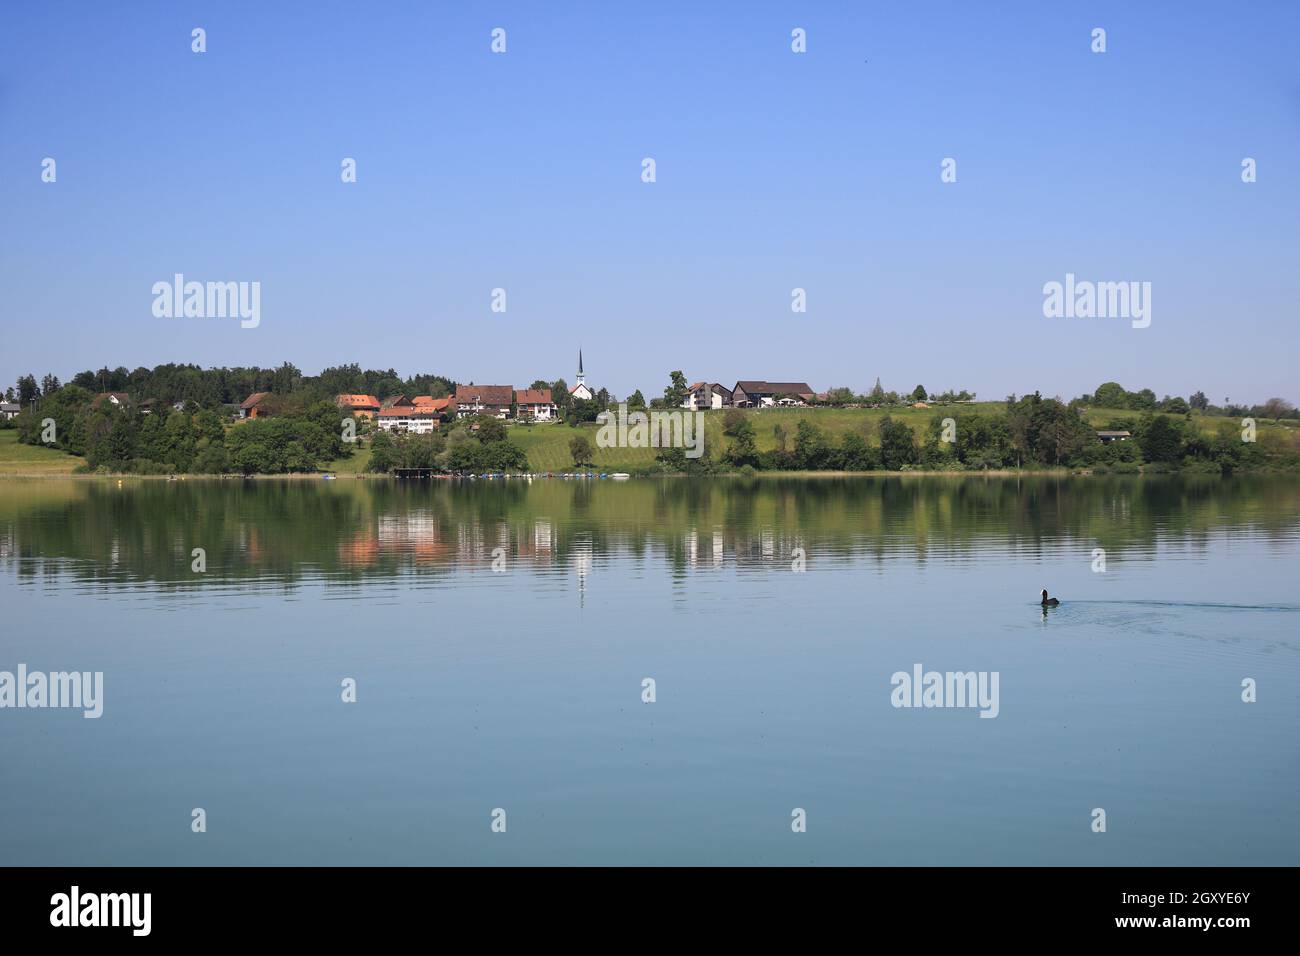 Dream like summer morning at the shore of Lake Pfaffikon, Zurich Canton. Stock Photo